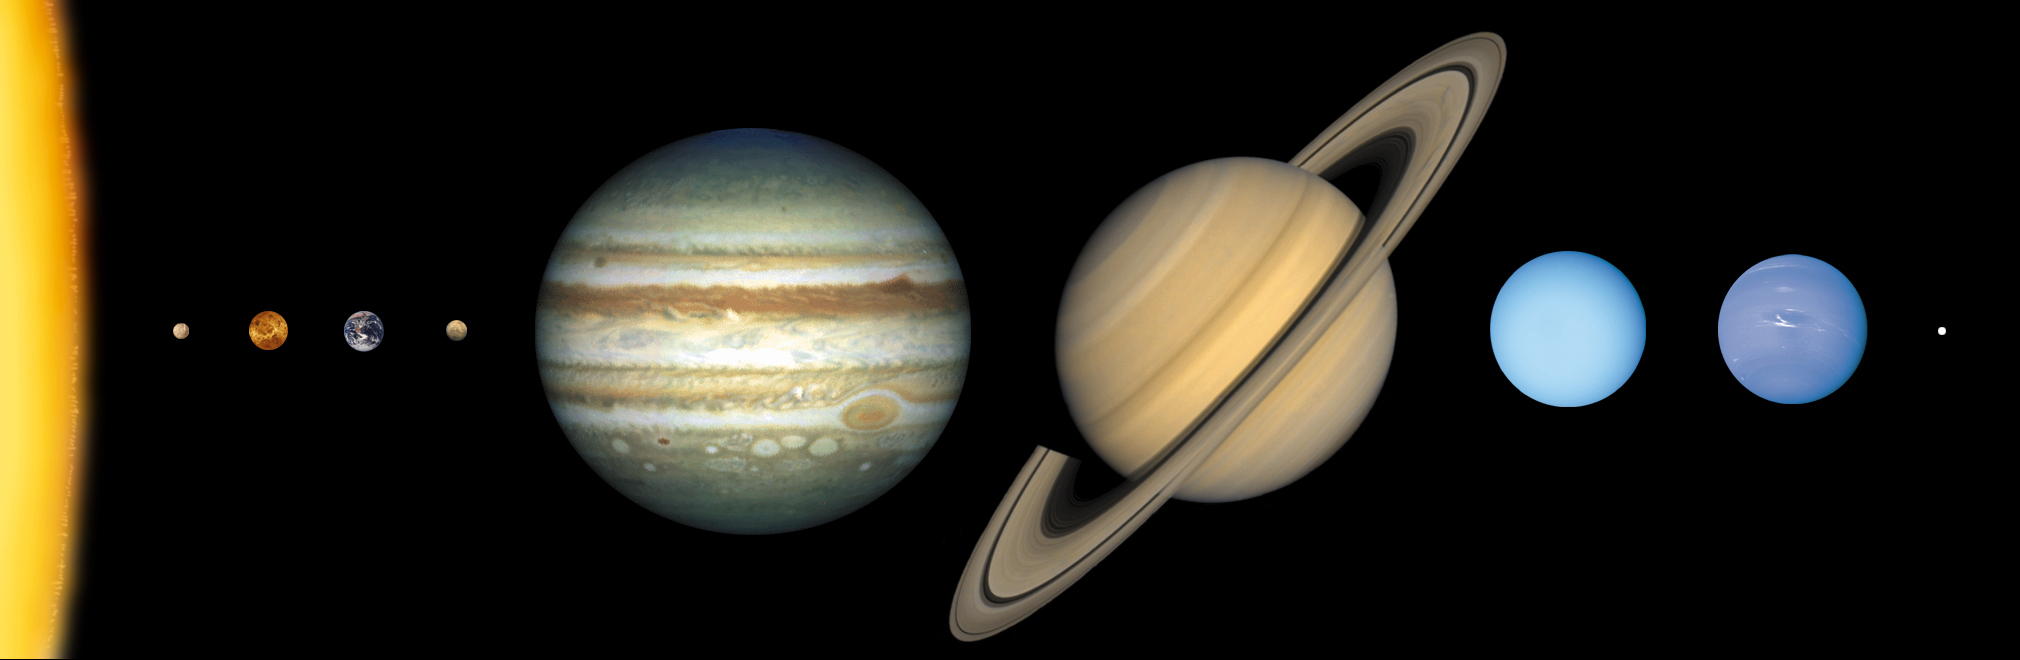 planets bigger than the sun